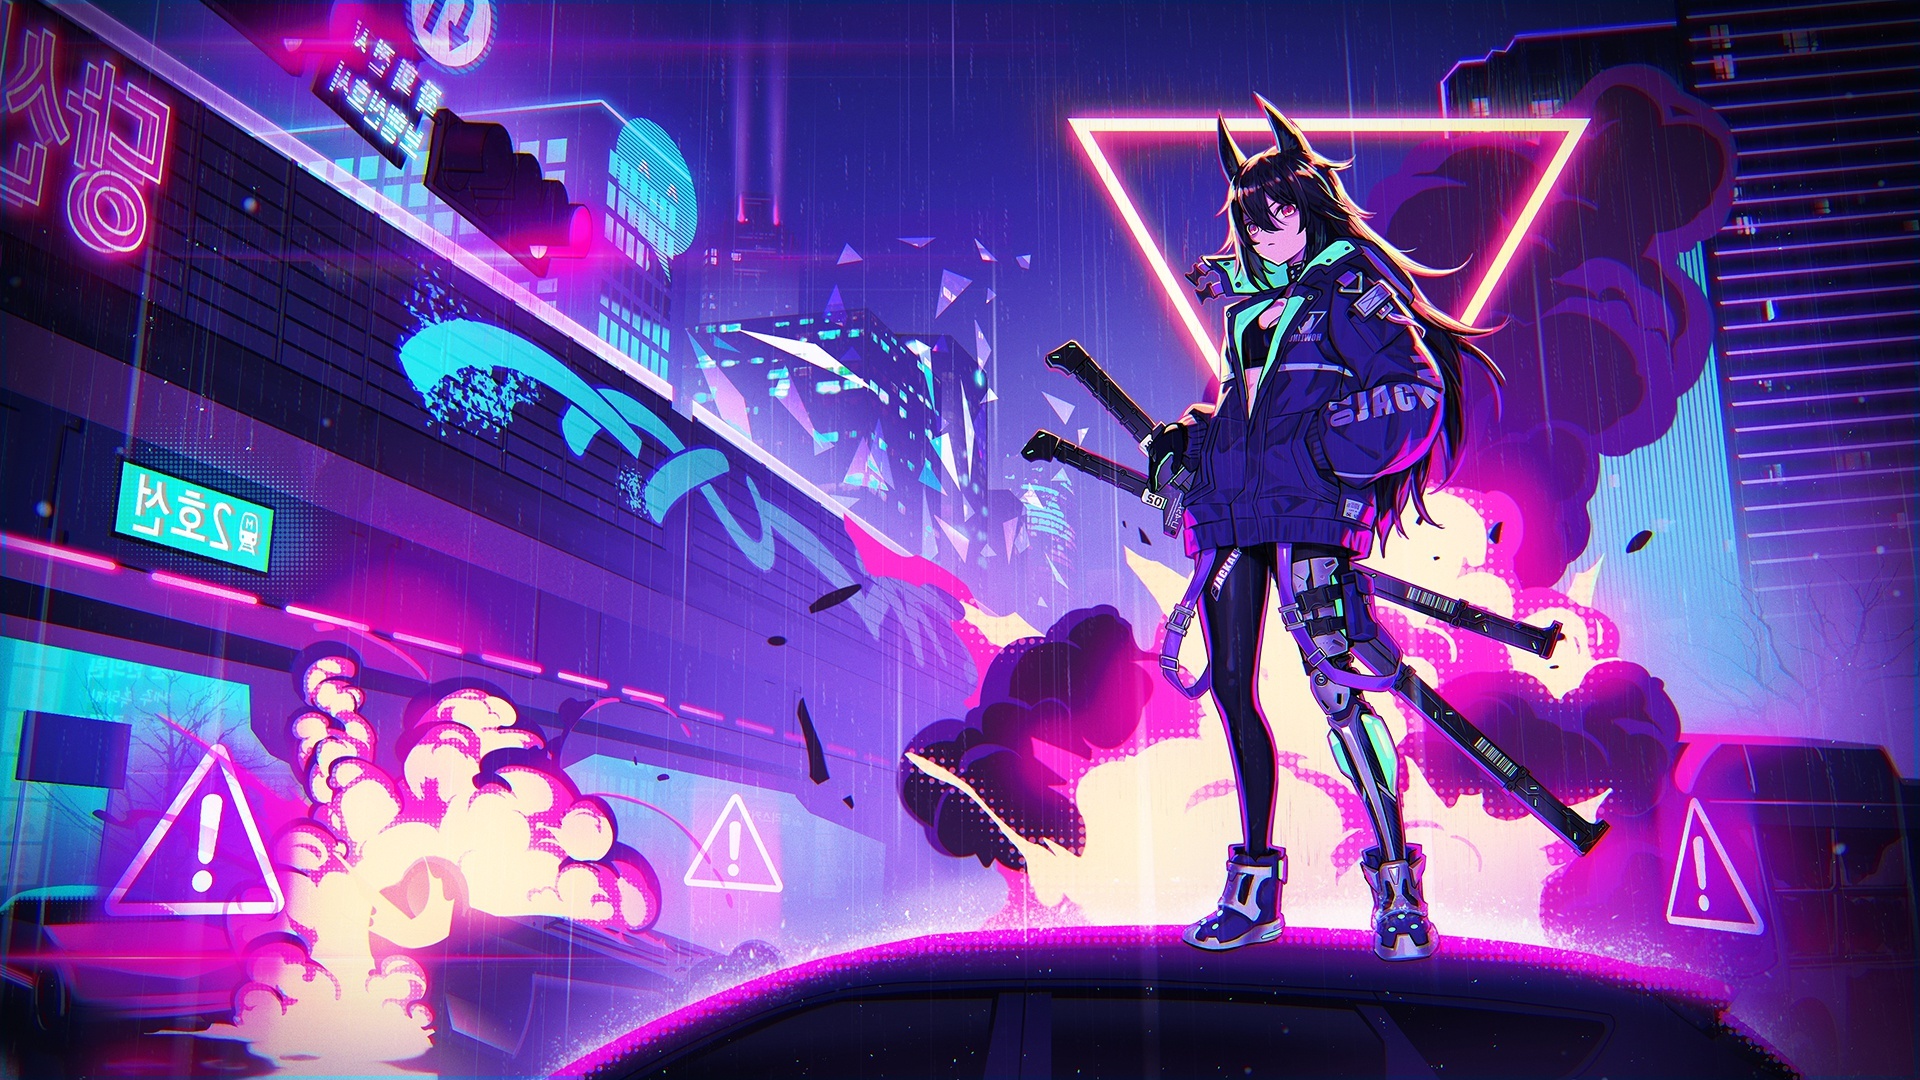 Wallpaper Cyberpunk, Anime Girl, Neo Seoul, Swords, Neon, Raining:1920x1080